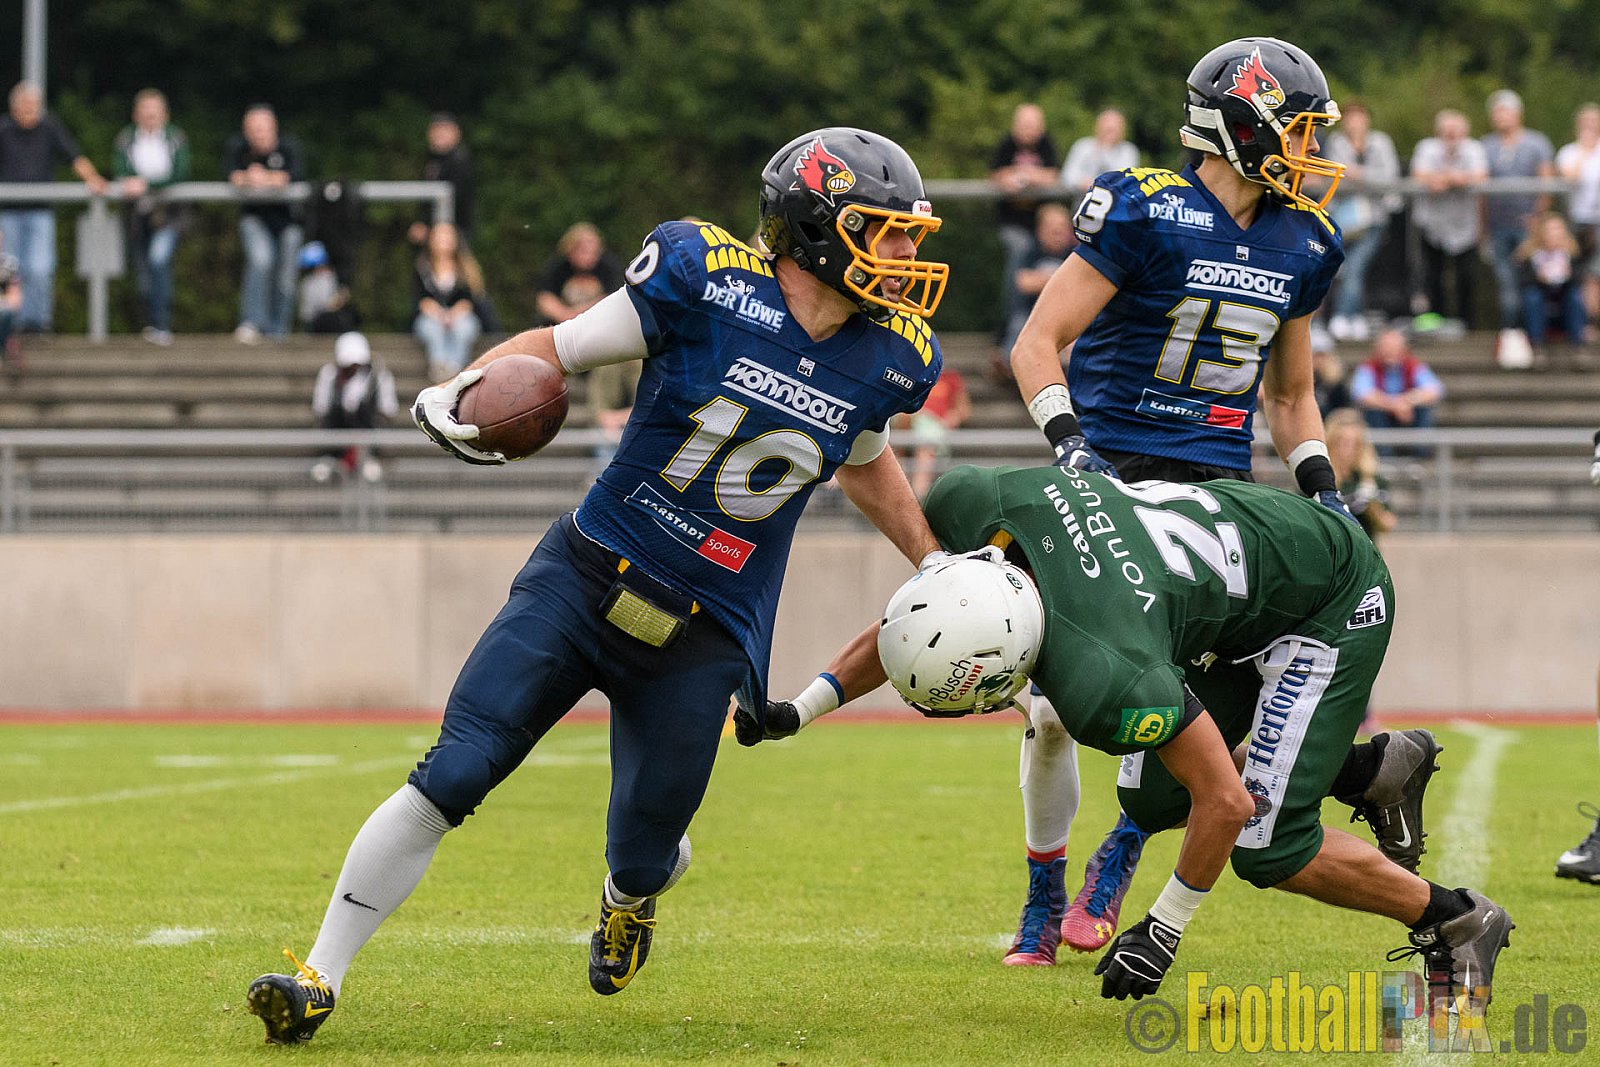 Essen Assindia Cardinals vs. Bielefeld Bulldogs - 13.08.2016 GFL2: Essen Assindia Cardinals vs. Bielefeld Bulldogs (49:6)